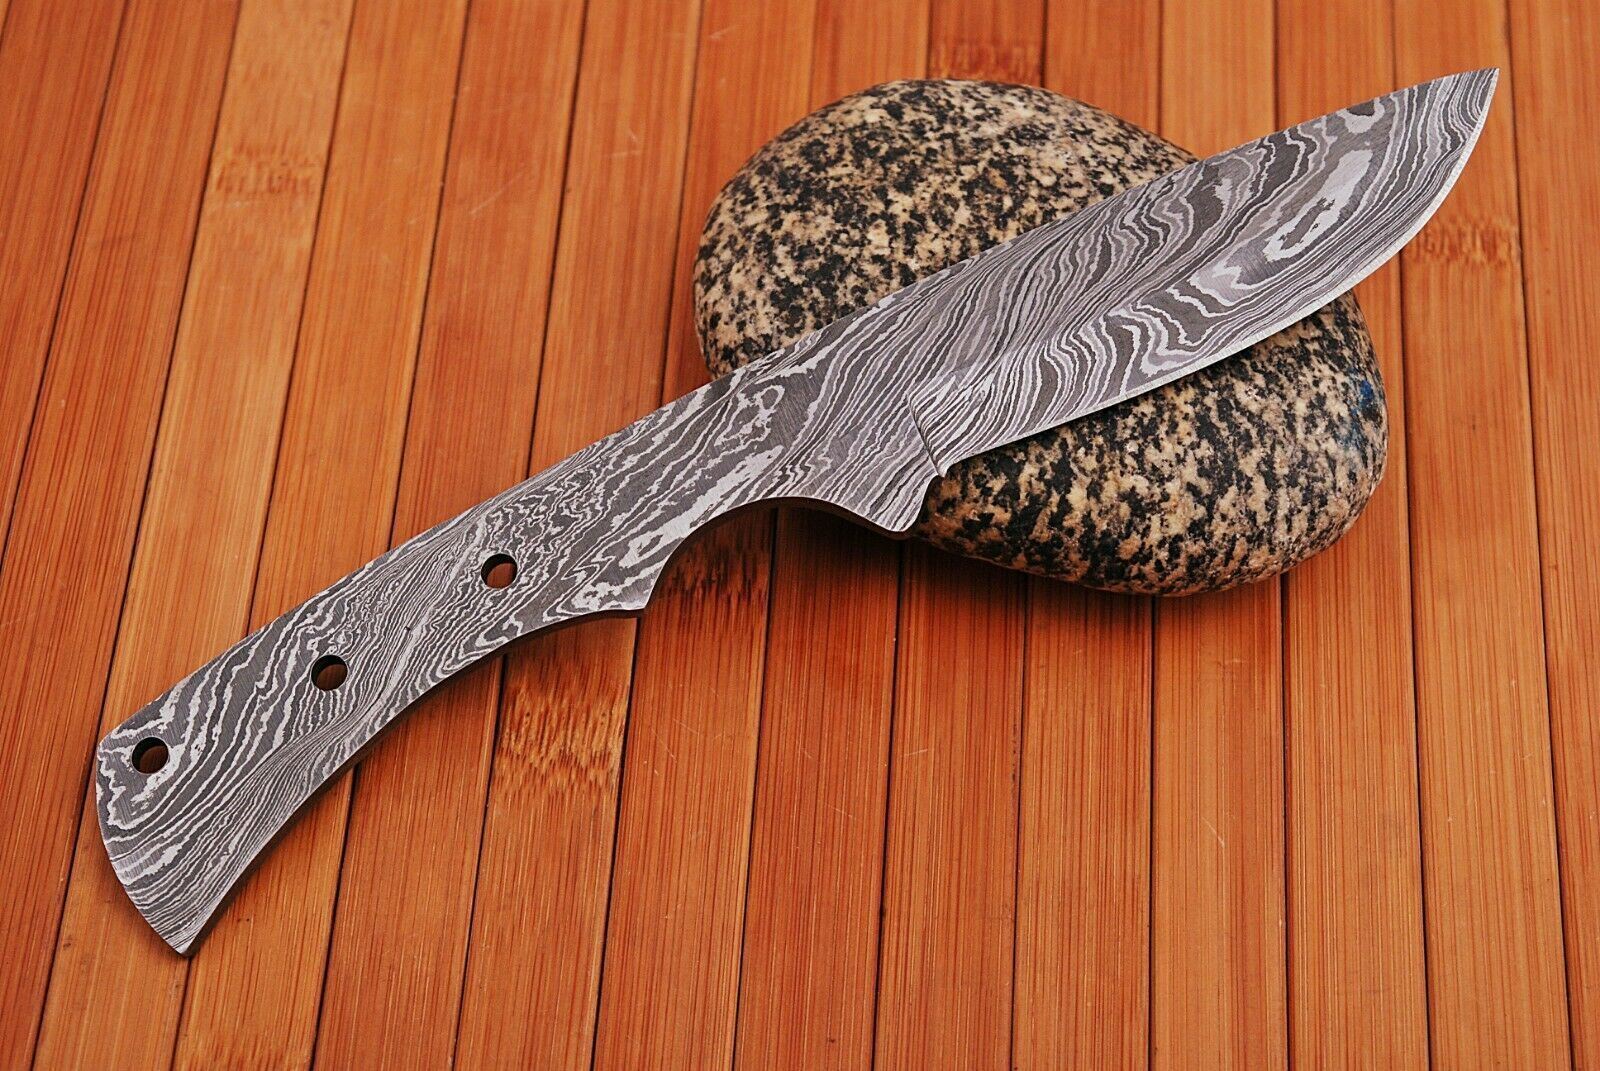 SHARDBLADE HAND FORGED Damascus Steel Blank Blade Knife Making Supplies W/Sheath